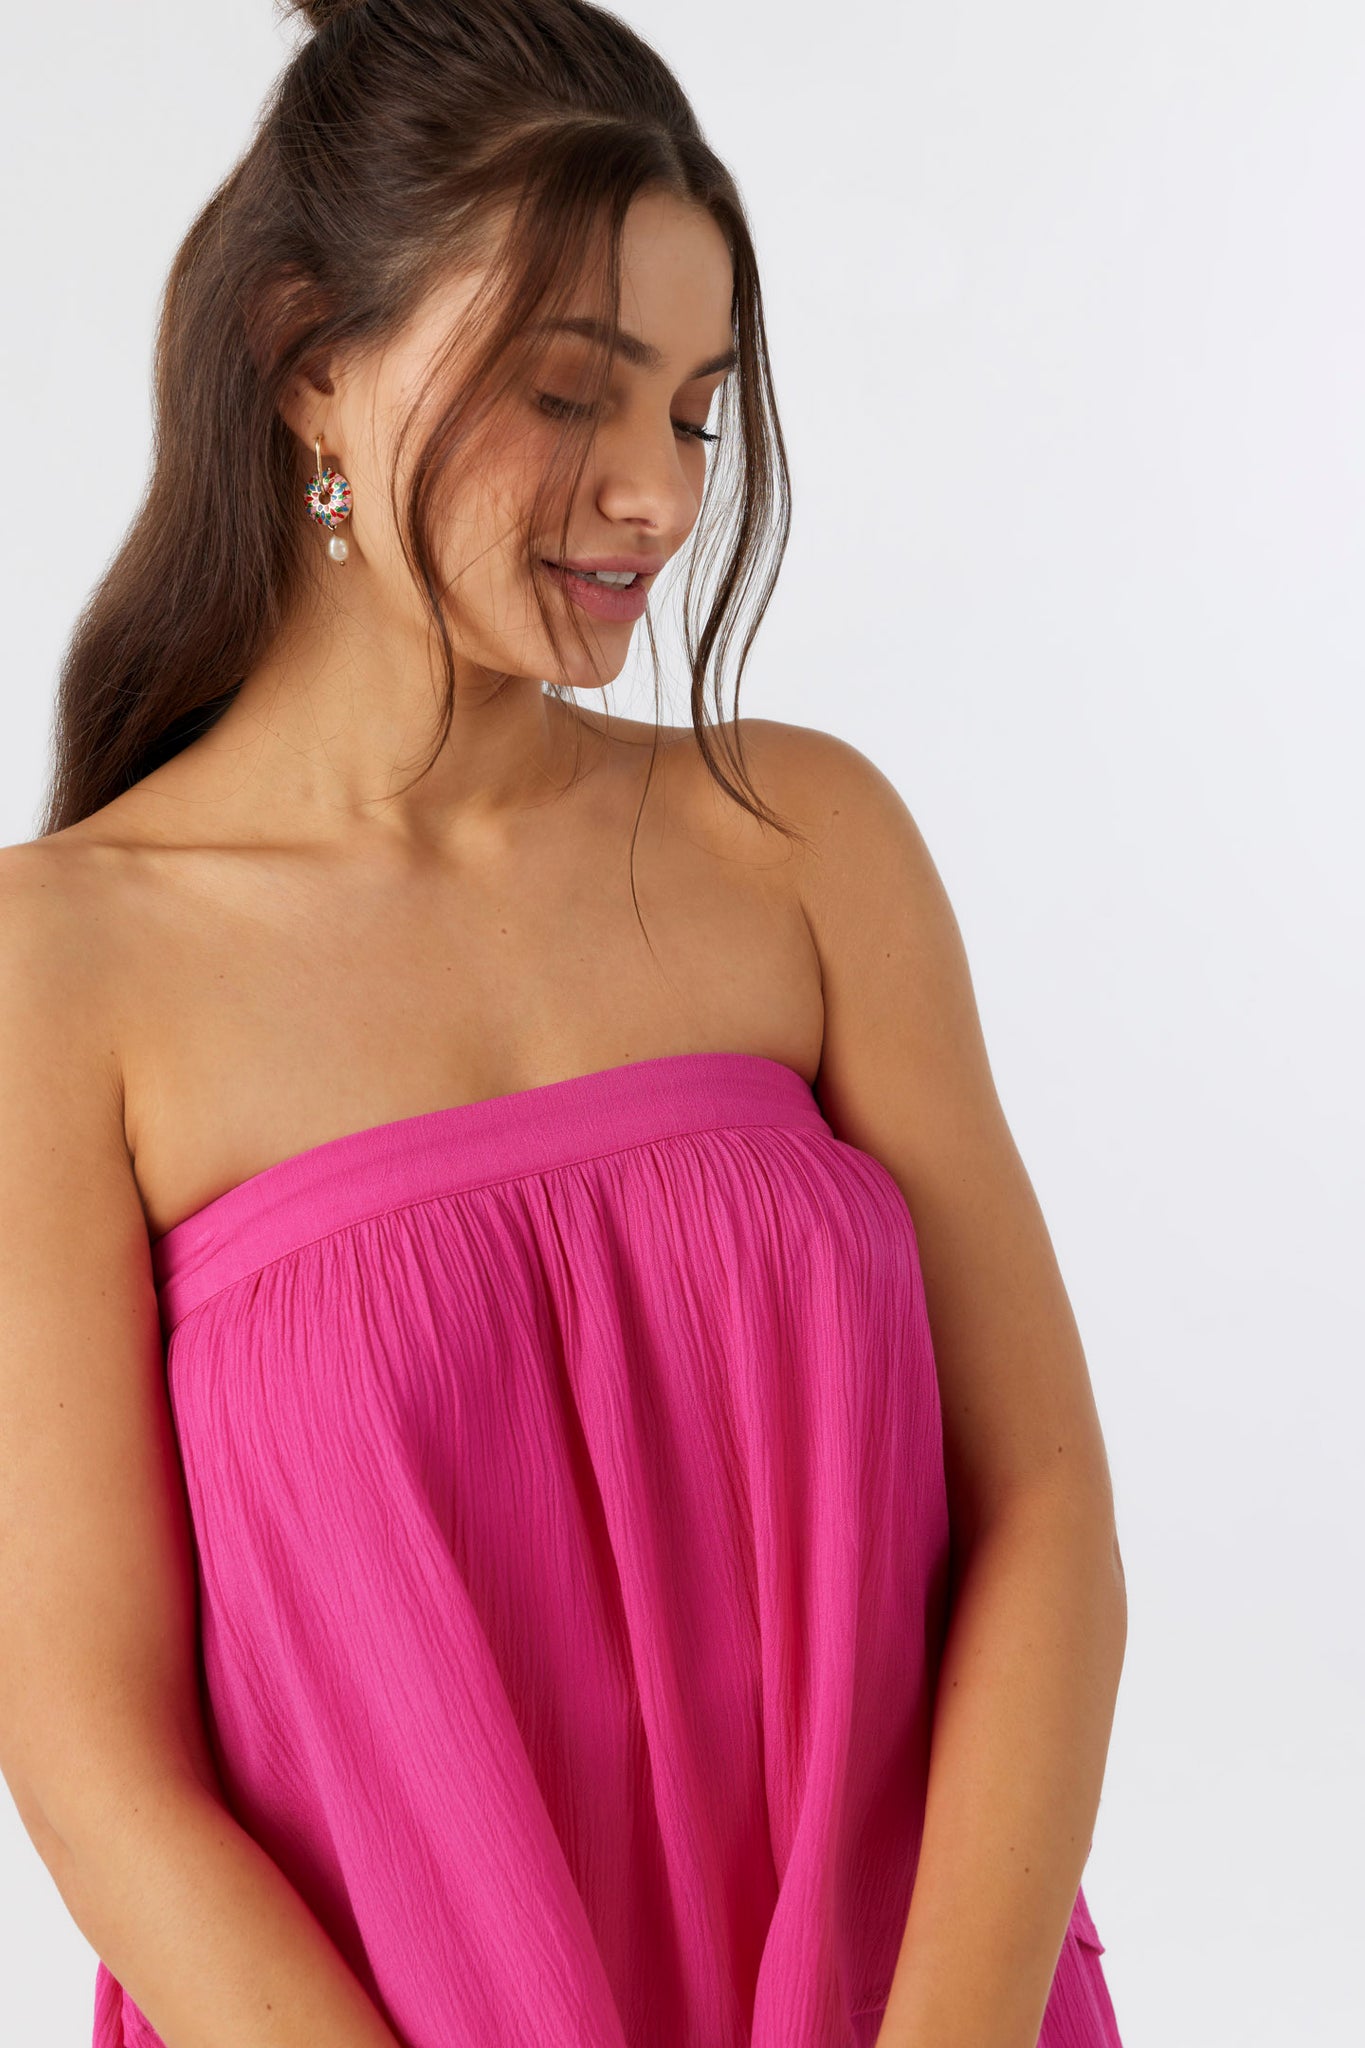 O'Neill Morette Spacedye Dress-Barbie Pink — REAL Watersports